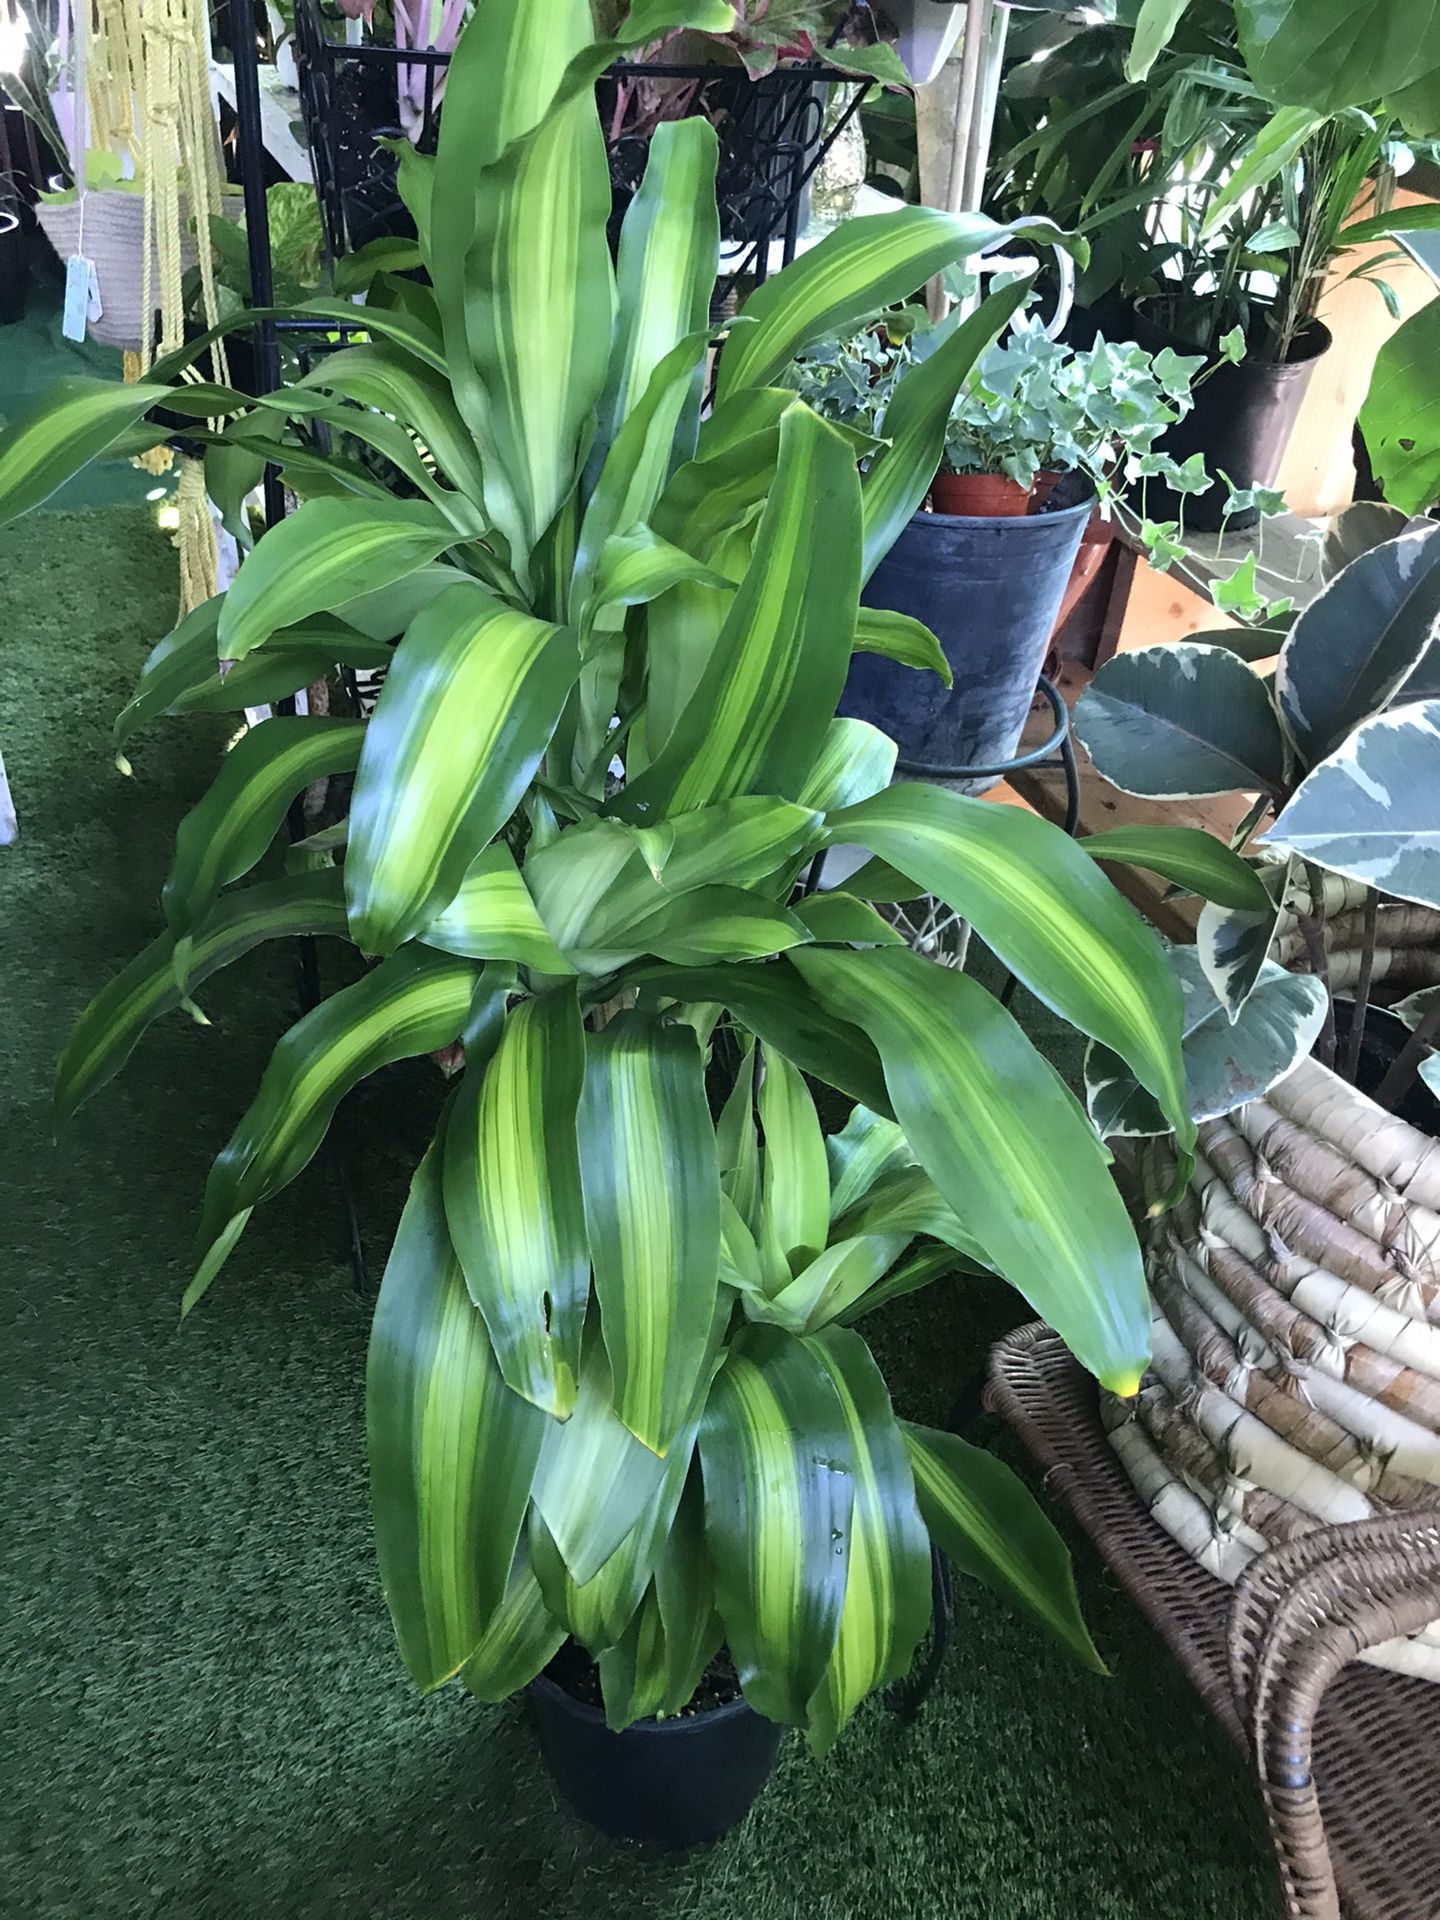 Plants (3gallons x 4ft tall Dracaena Corn “fortune plants” $20)